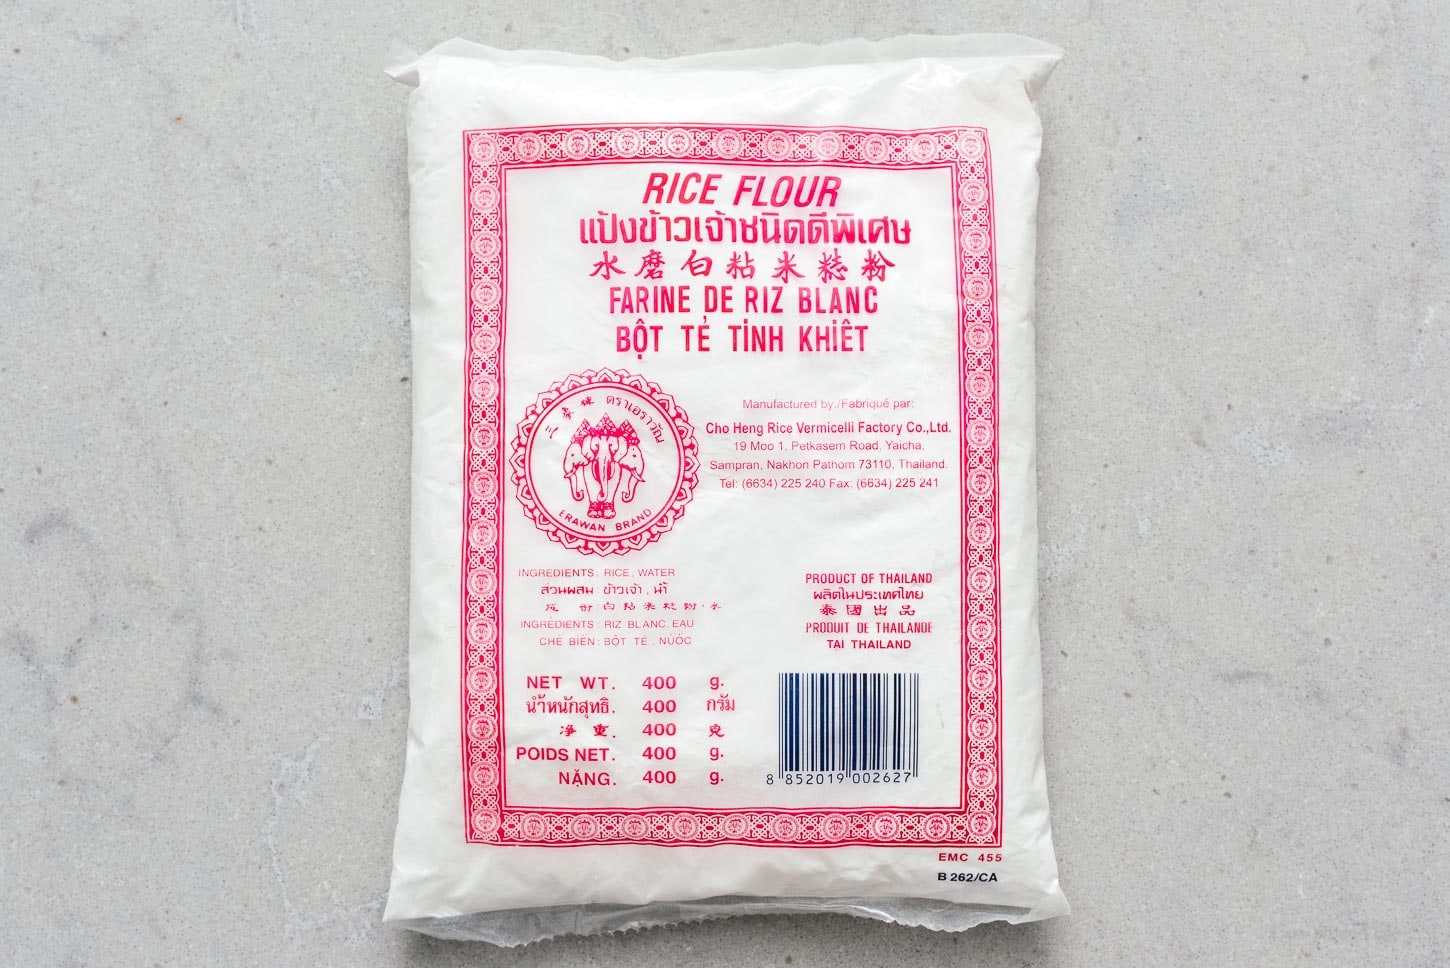 elephant brand rice flour | sharefavoritefood.com